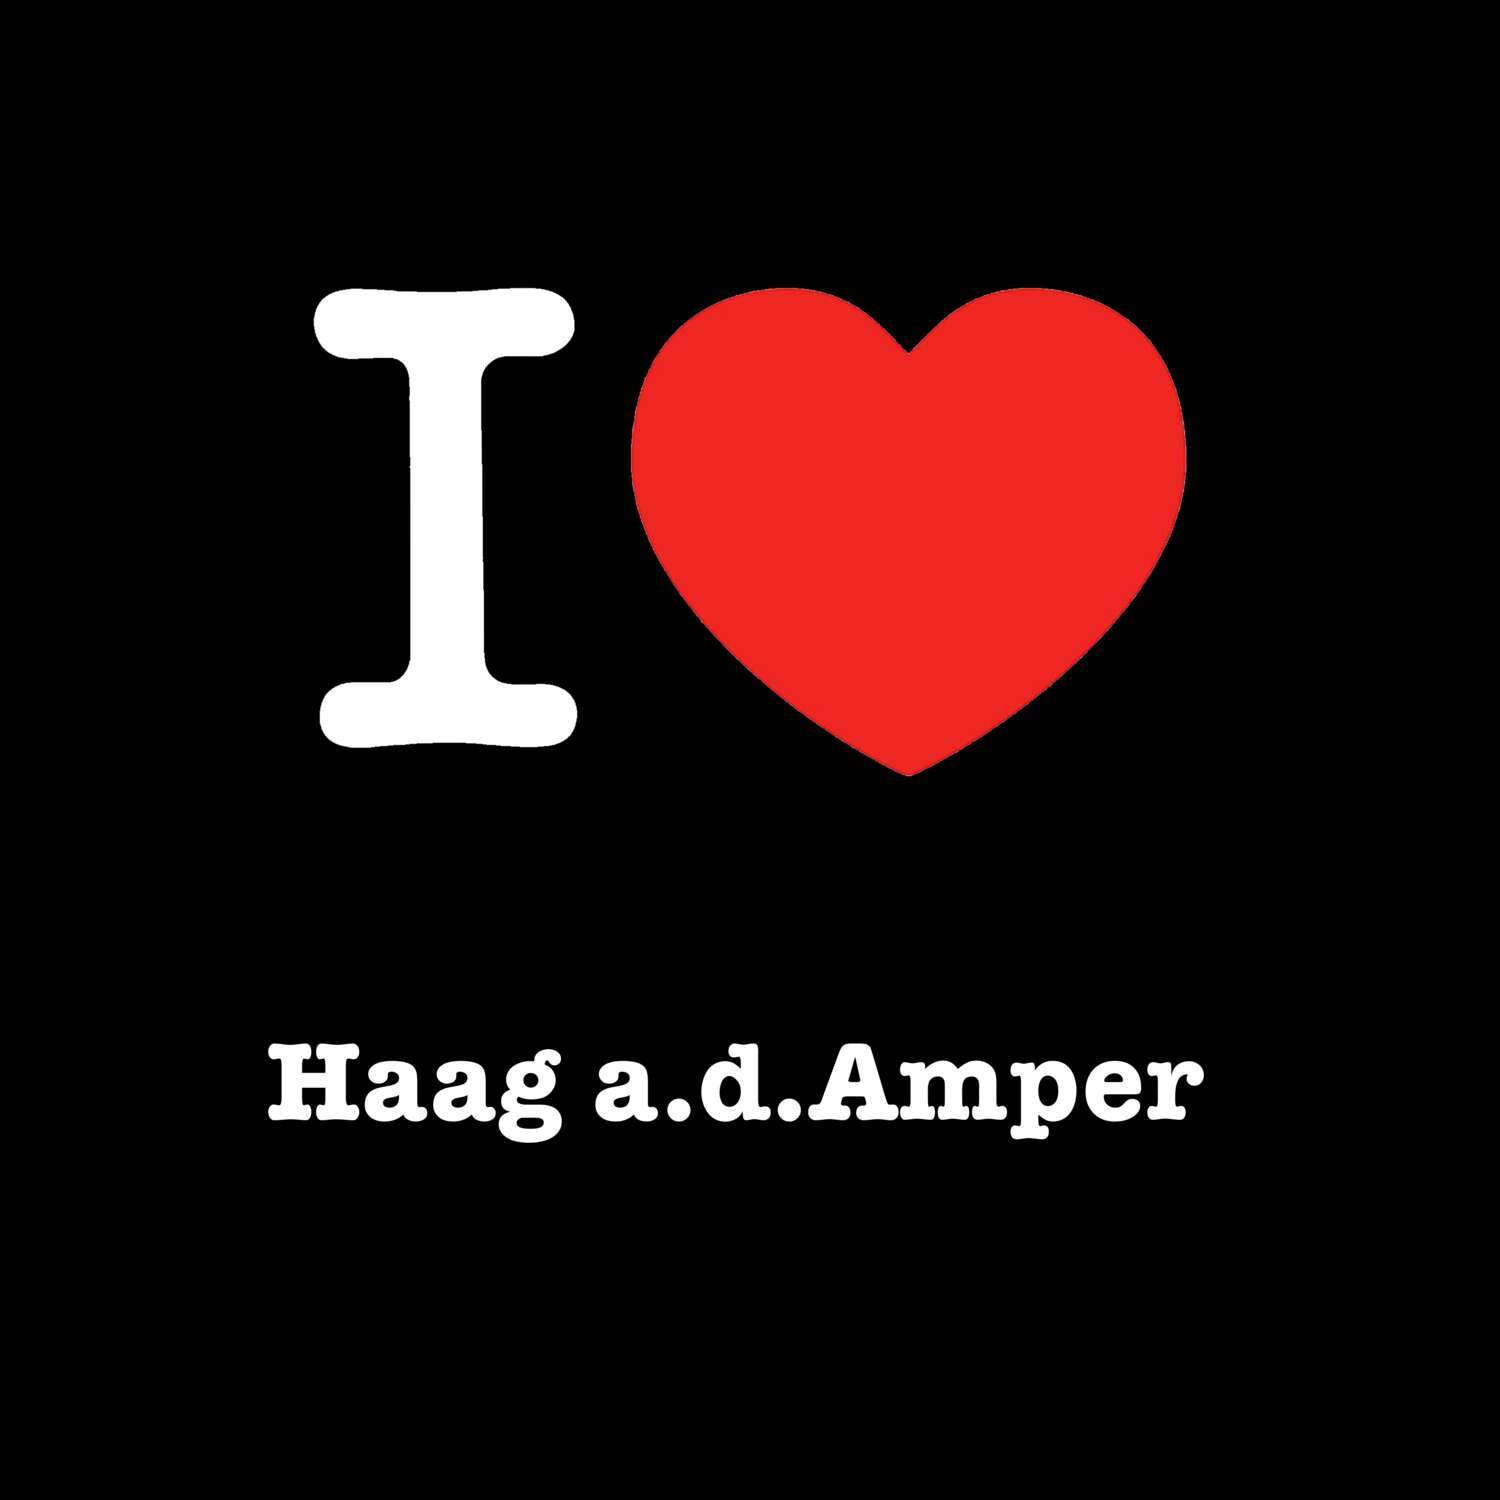 Haag a.d.Amper T-Shirt »I love«